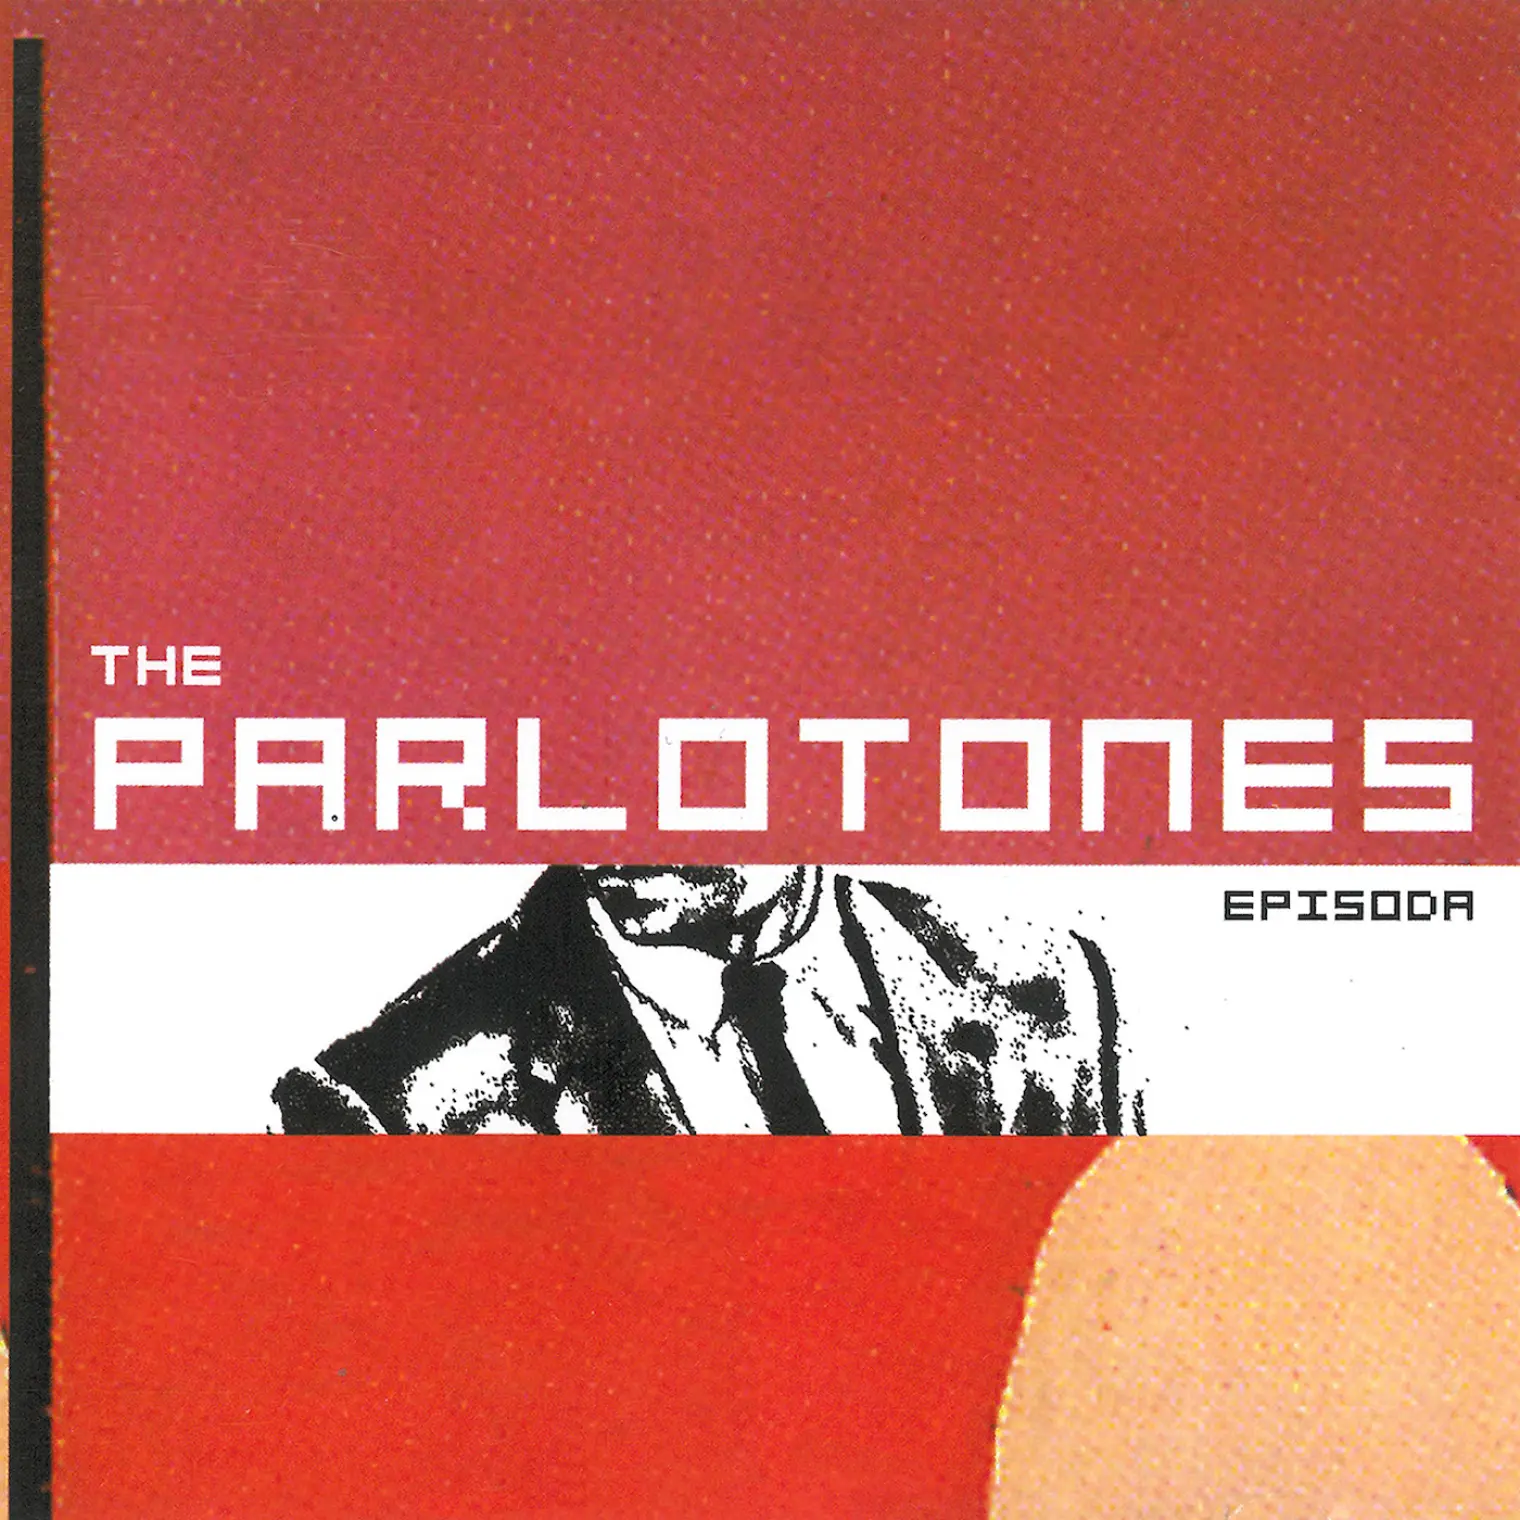 Episoda -  The Parlotones 